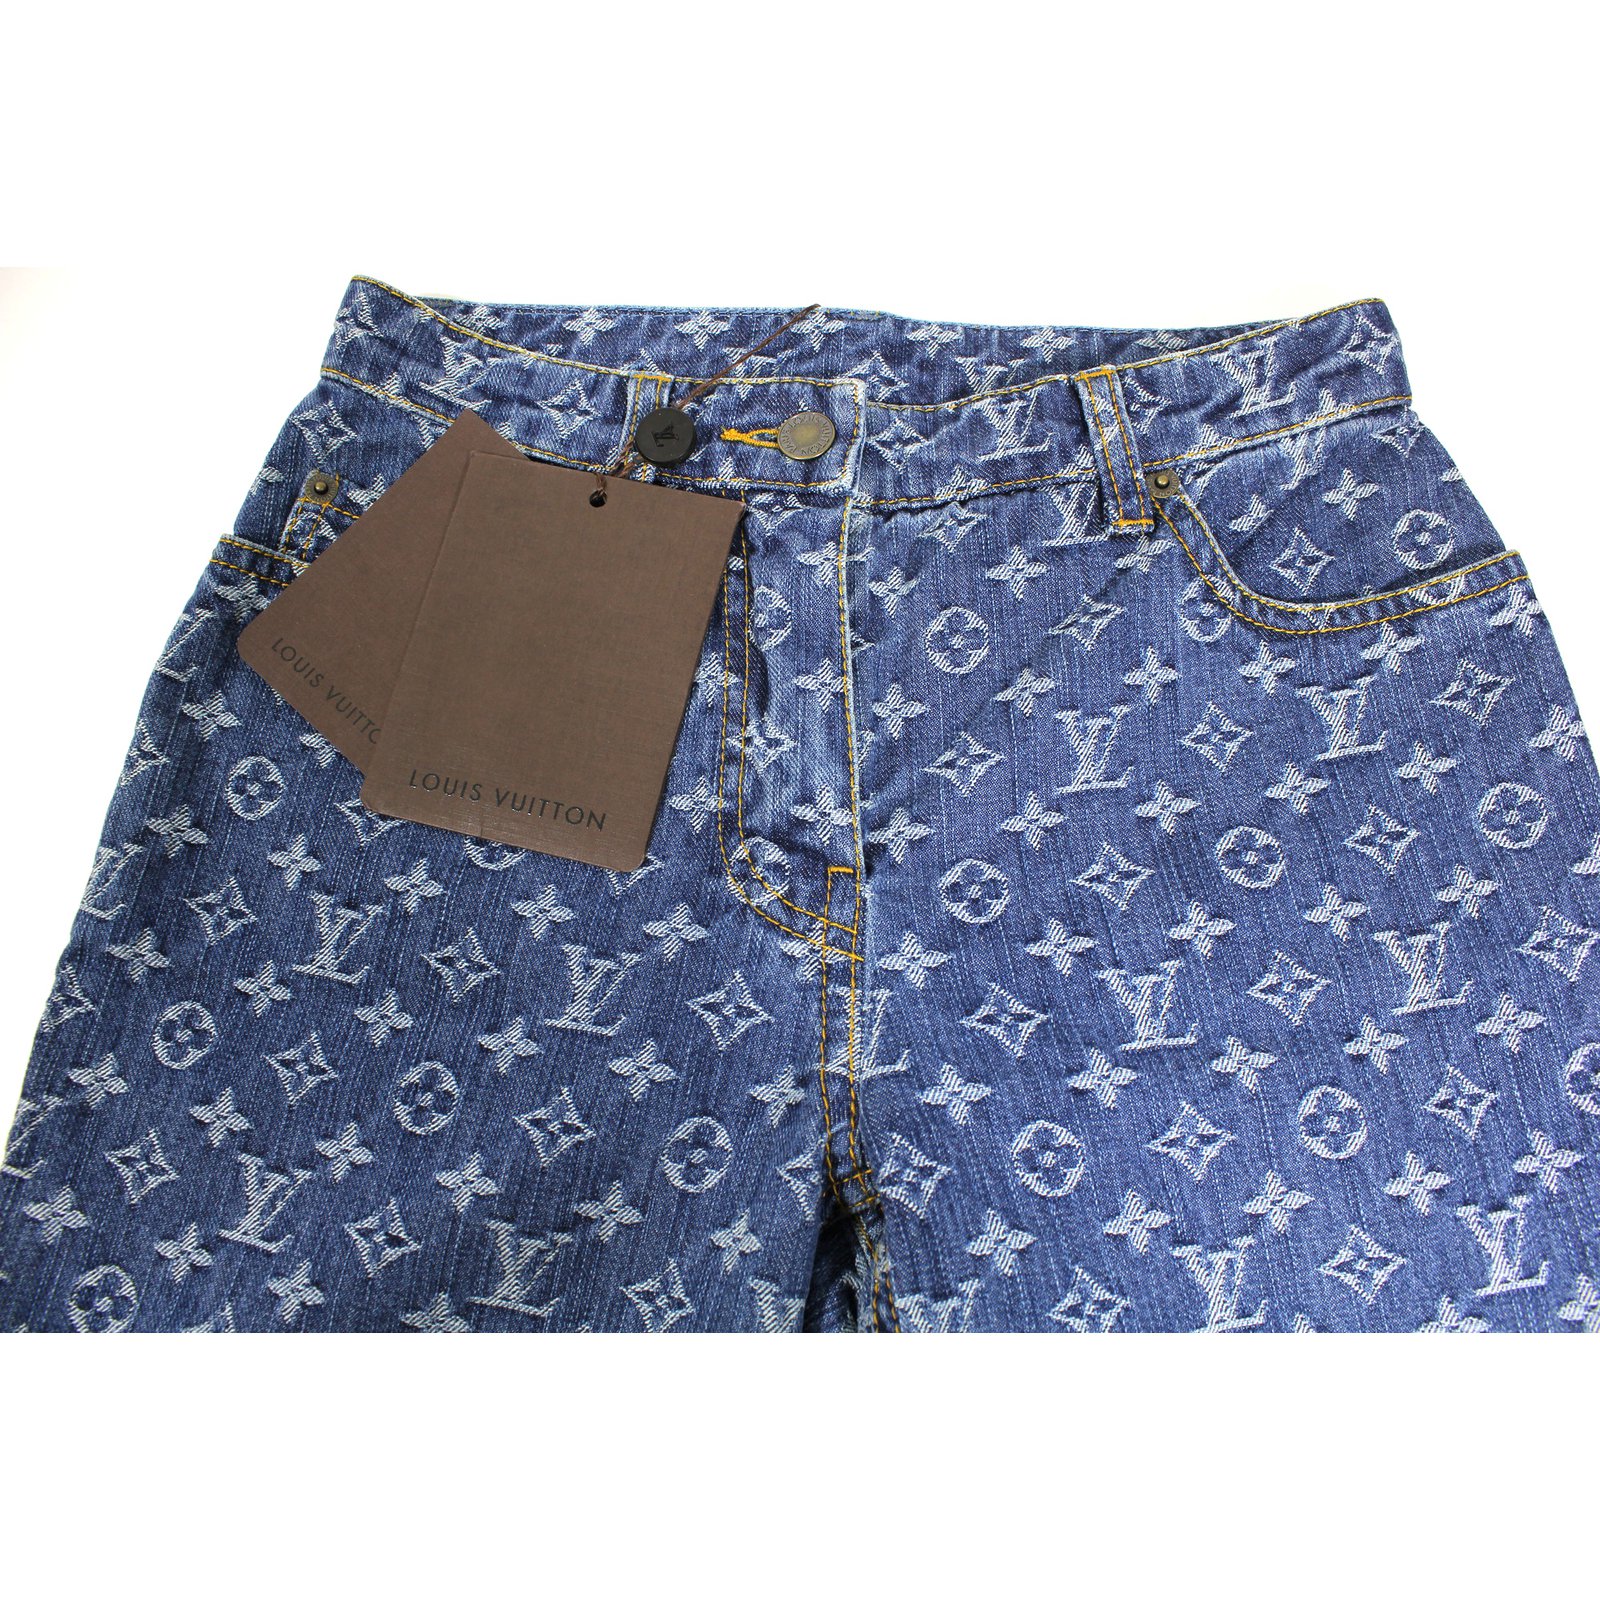 Pantalones cortos Louis vuitton Azul talla 34 UK - US de en Denim - Vaquero  - 30460310